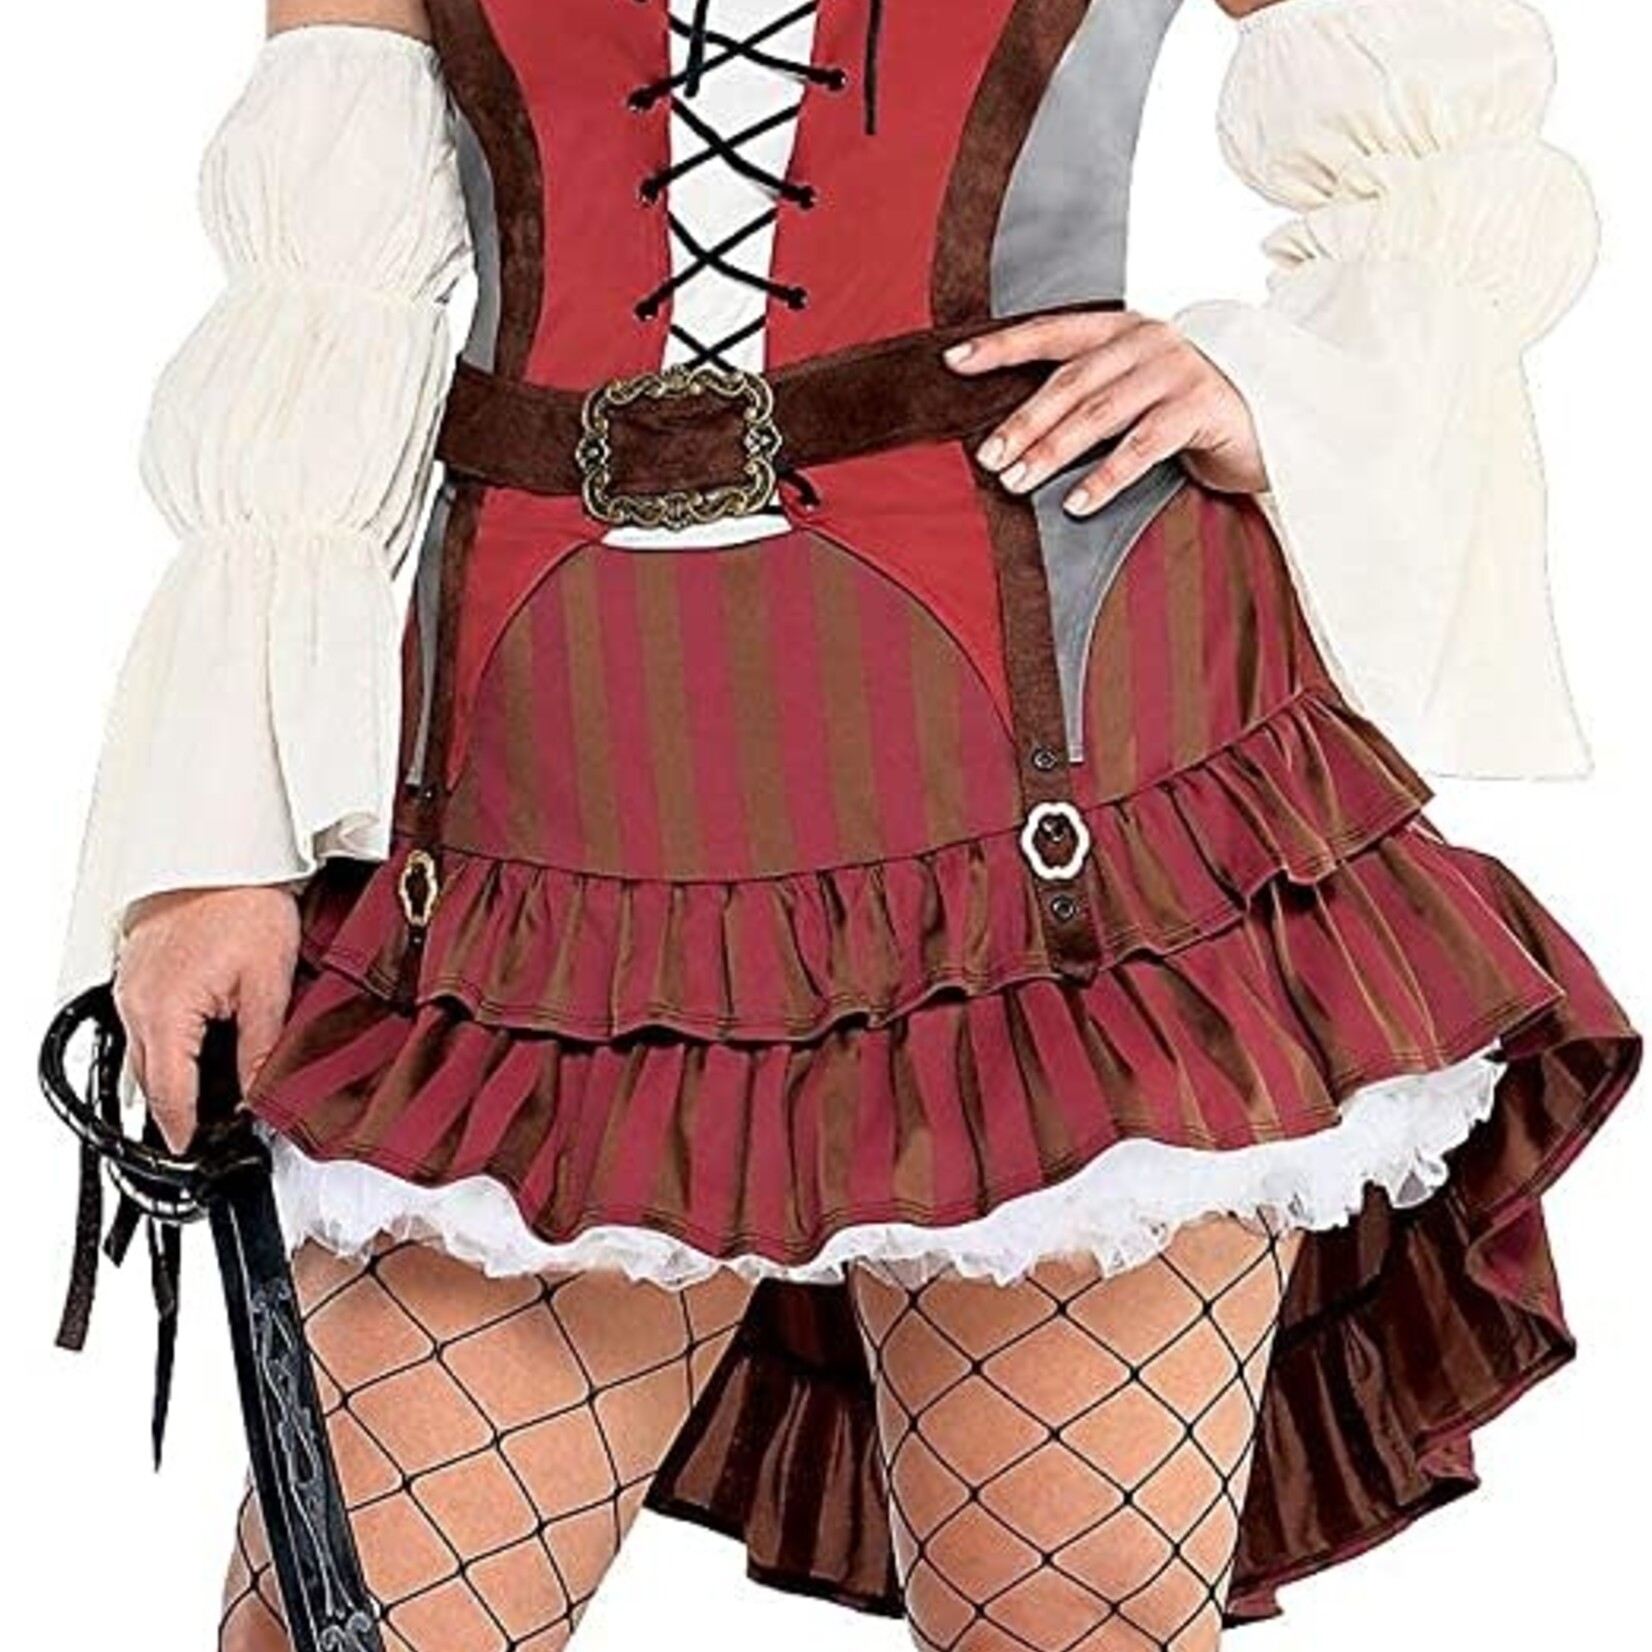 Castaway Pirate Women's Costume